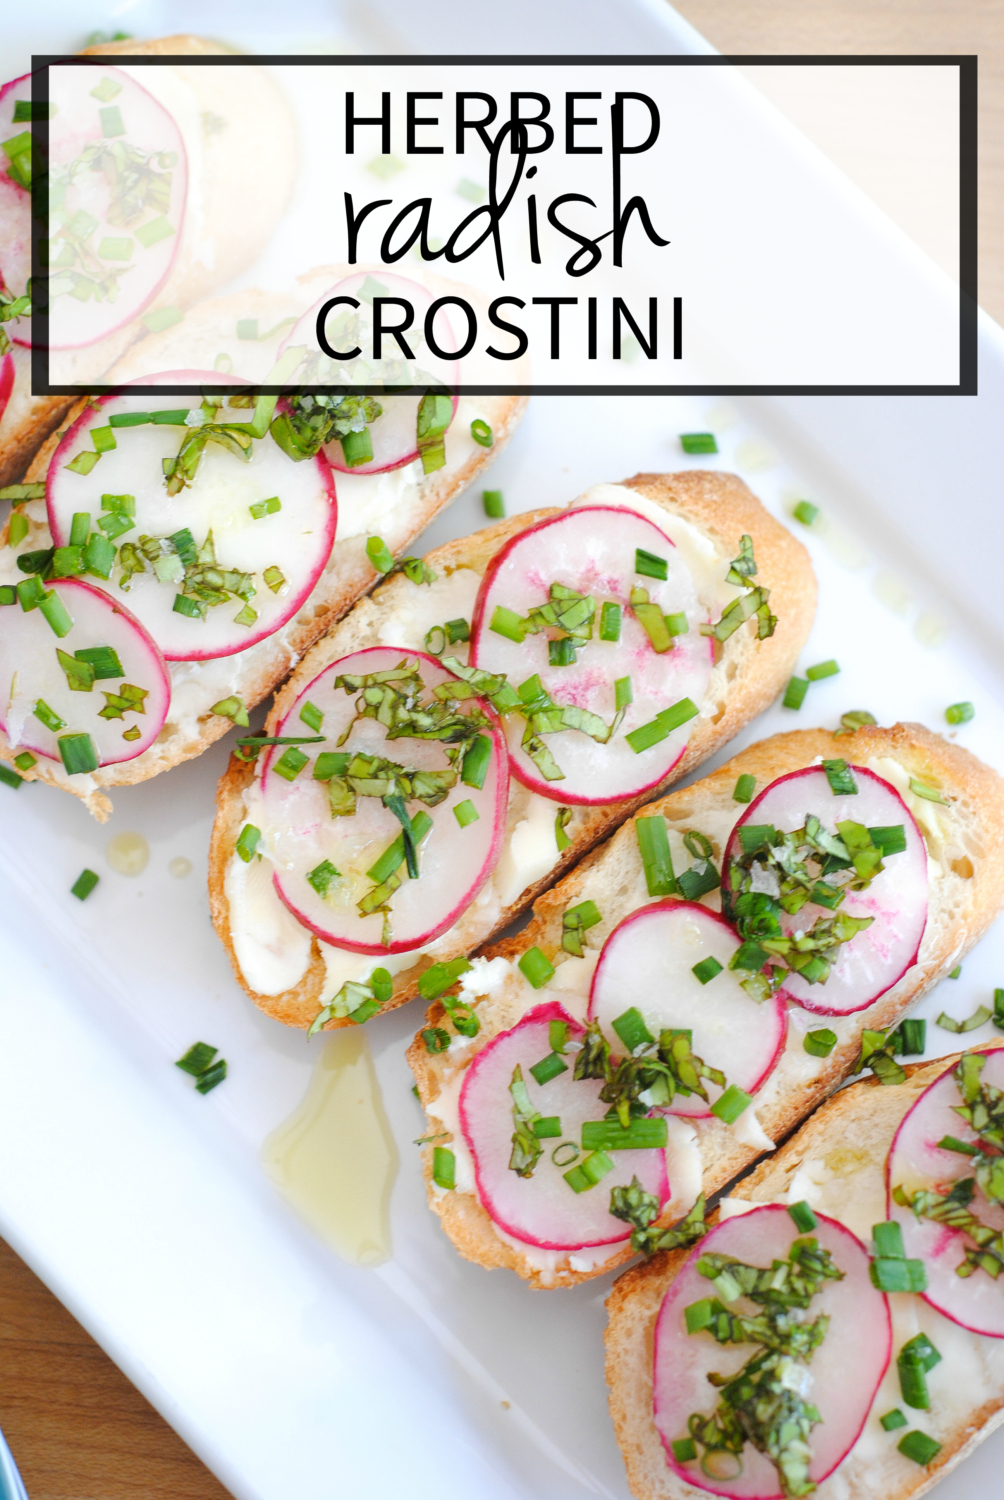 Herbed radish crostini - an easy, elegant, very French appetizer!